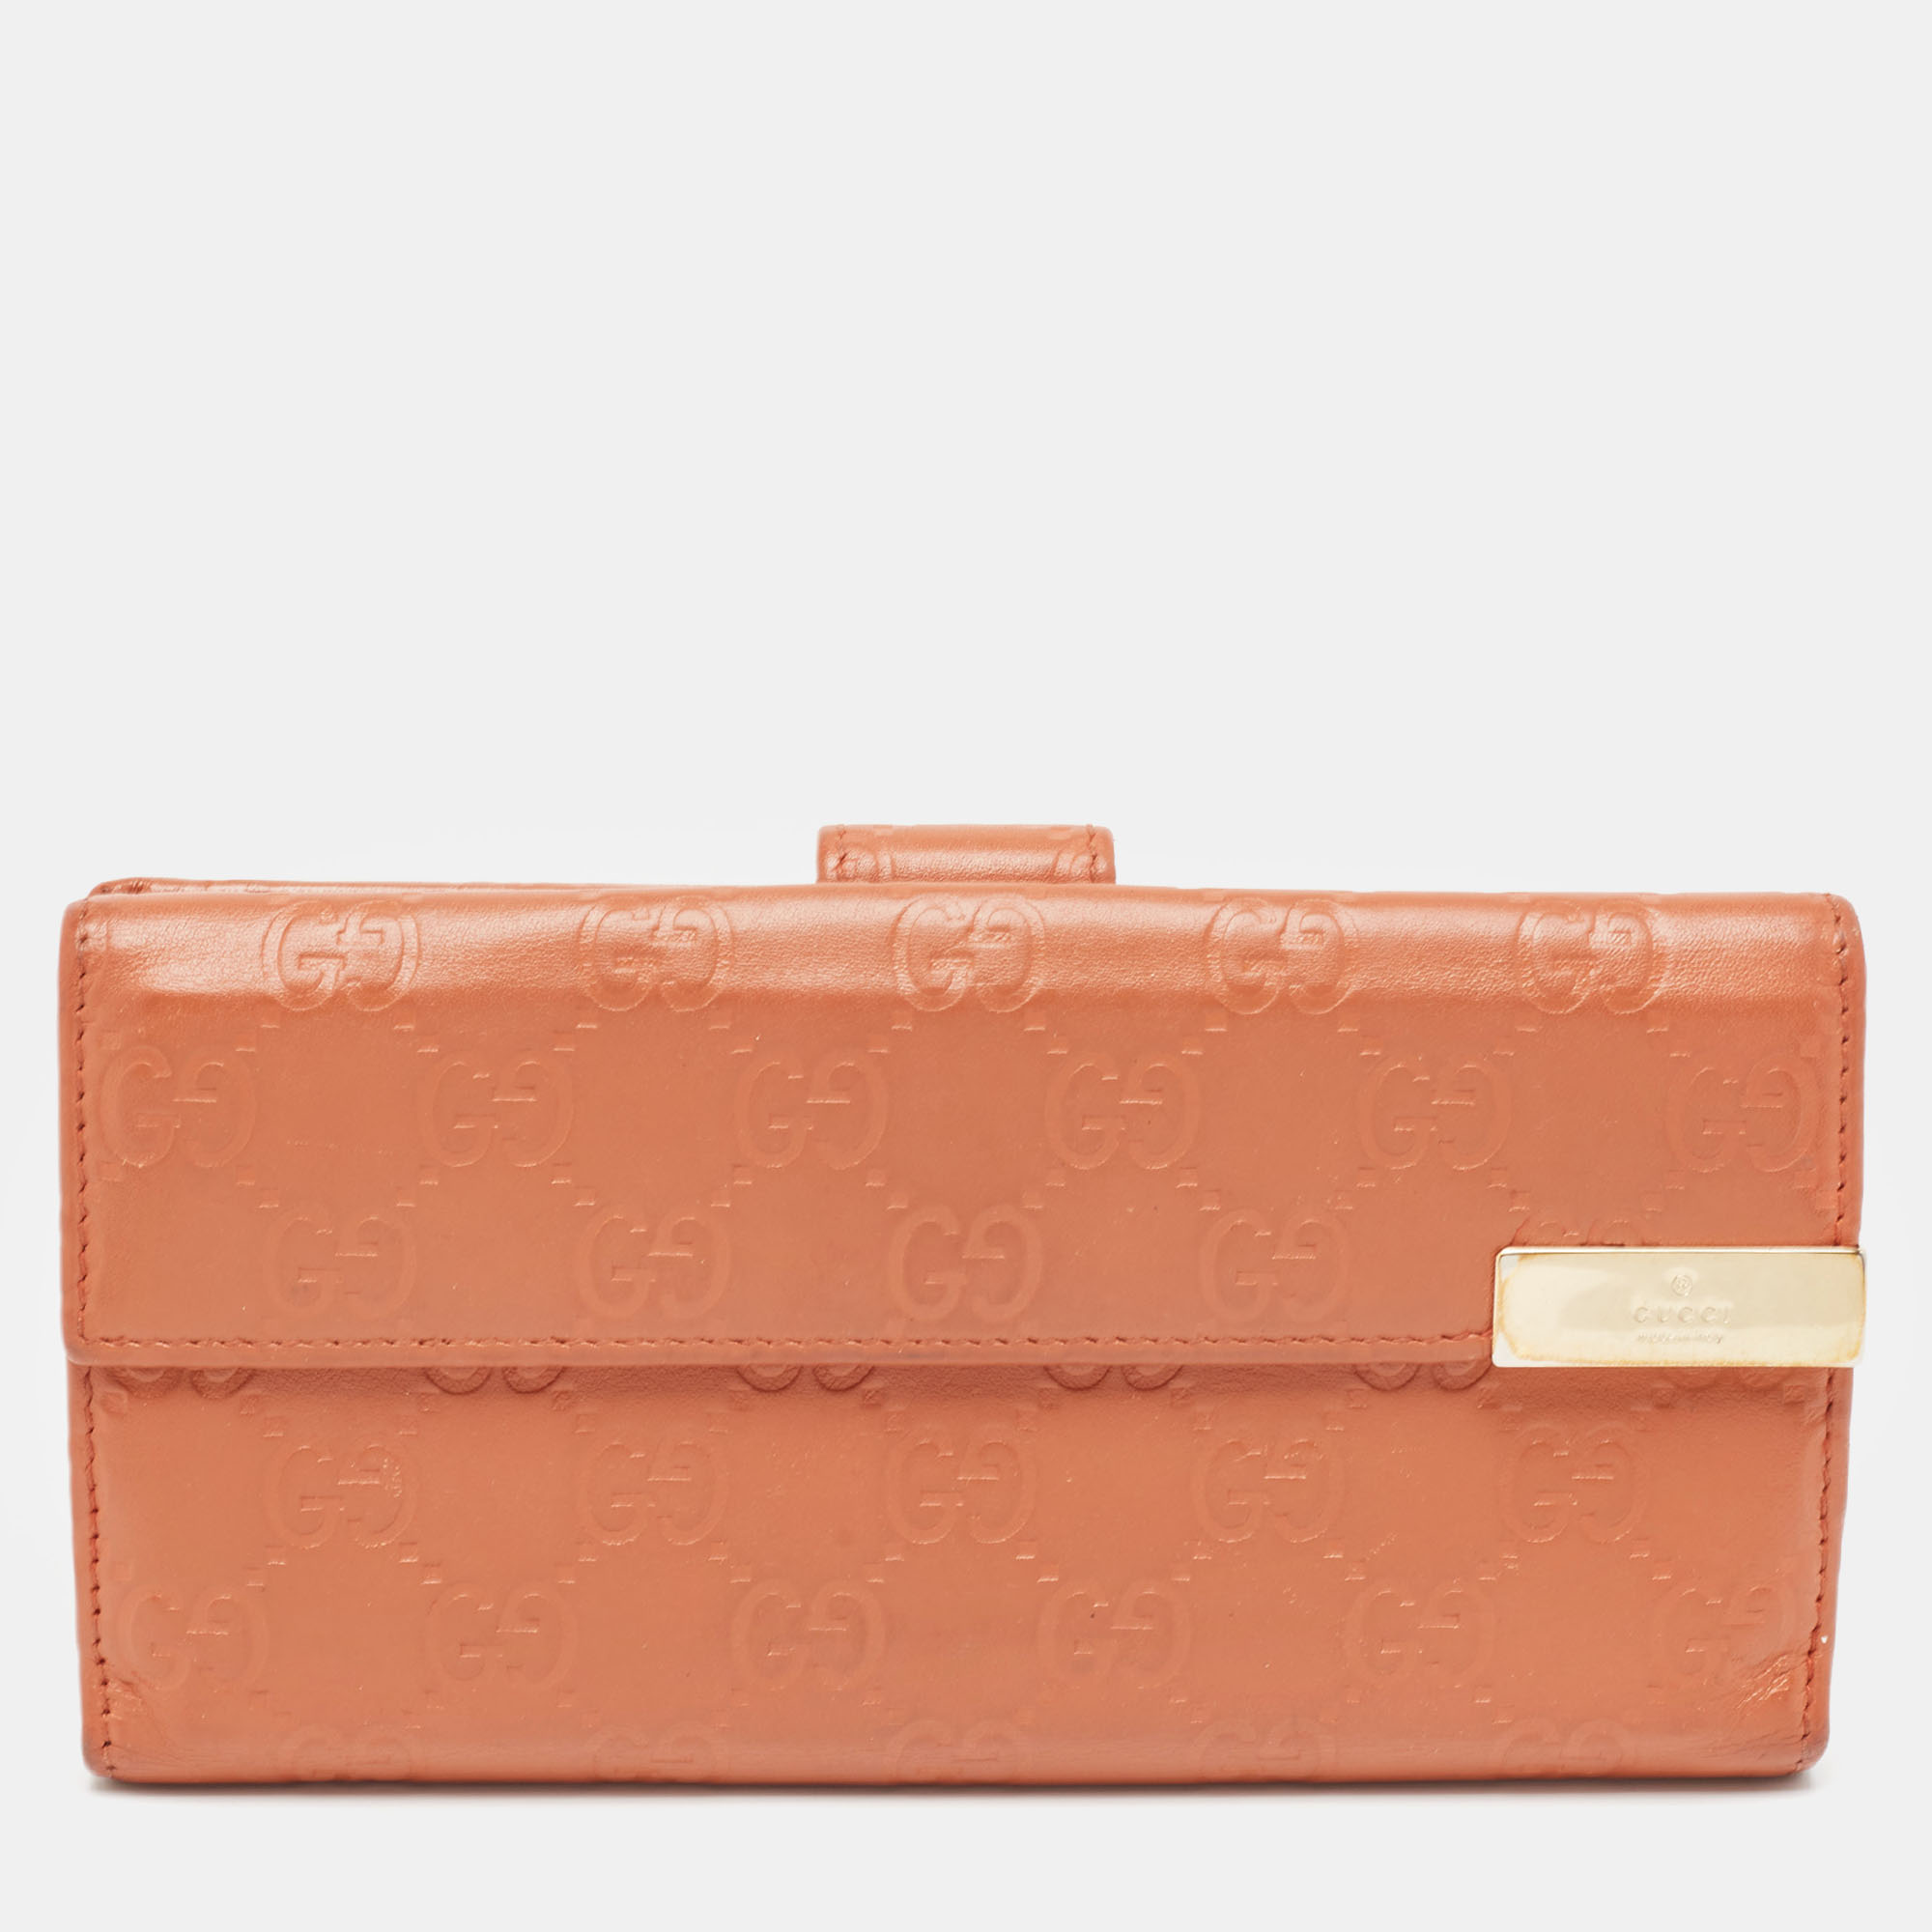 Gucci orange guccissima leather trademark continental wallet